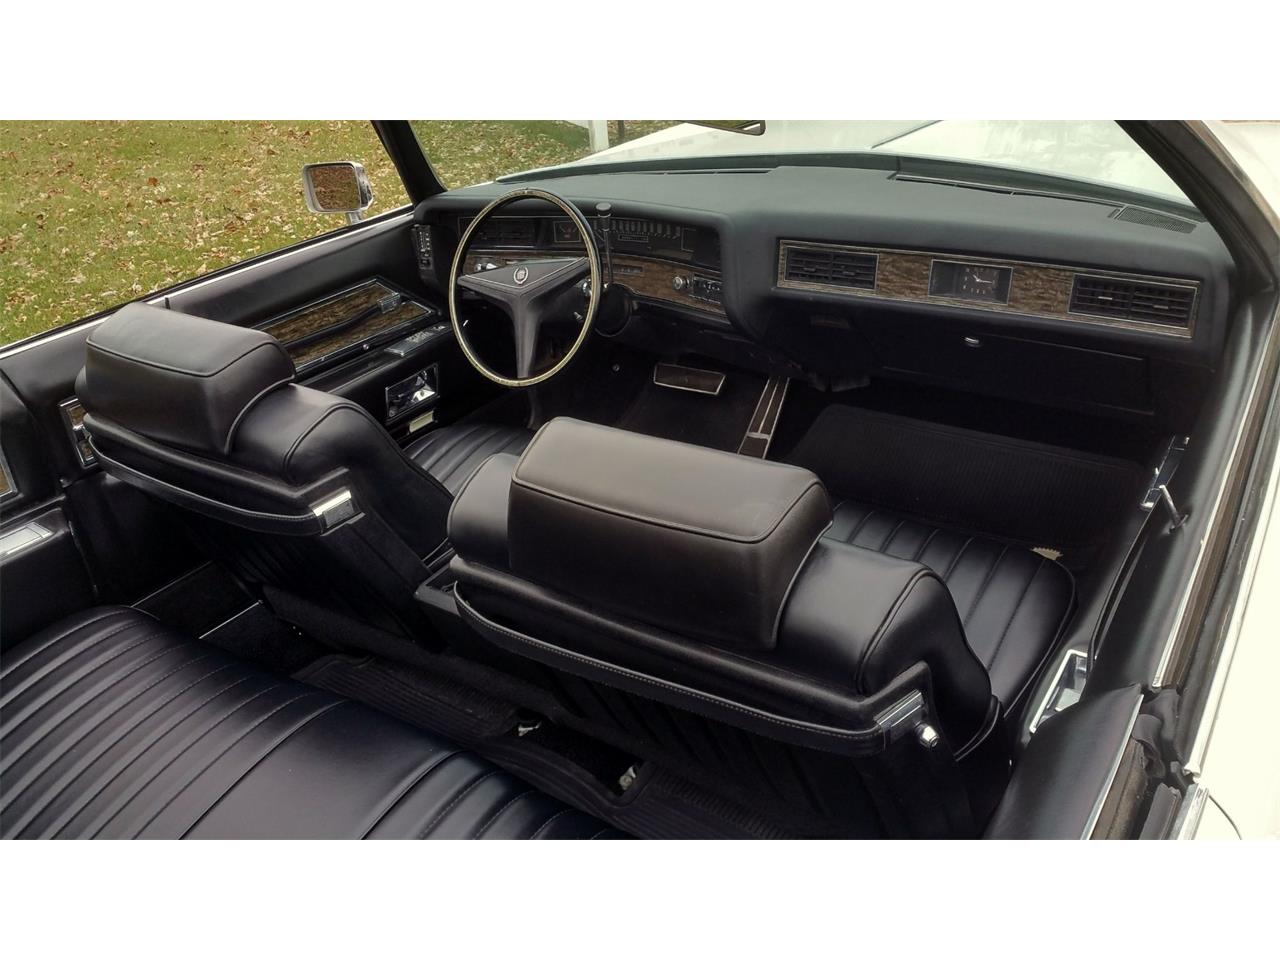 1971 Cadillac Eldorado for sale in Maple Lake, MN